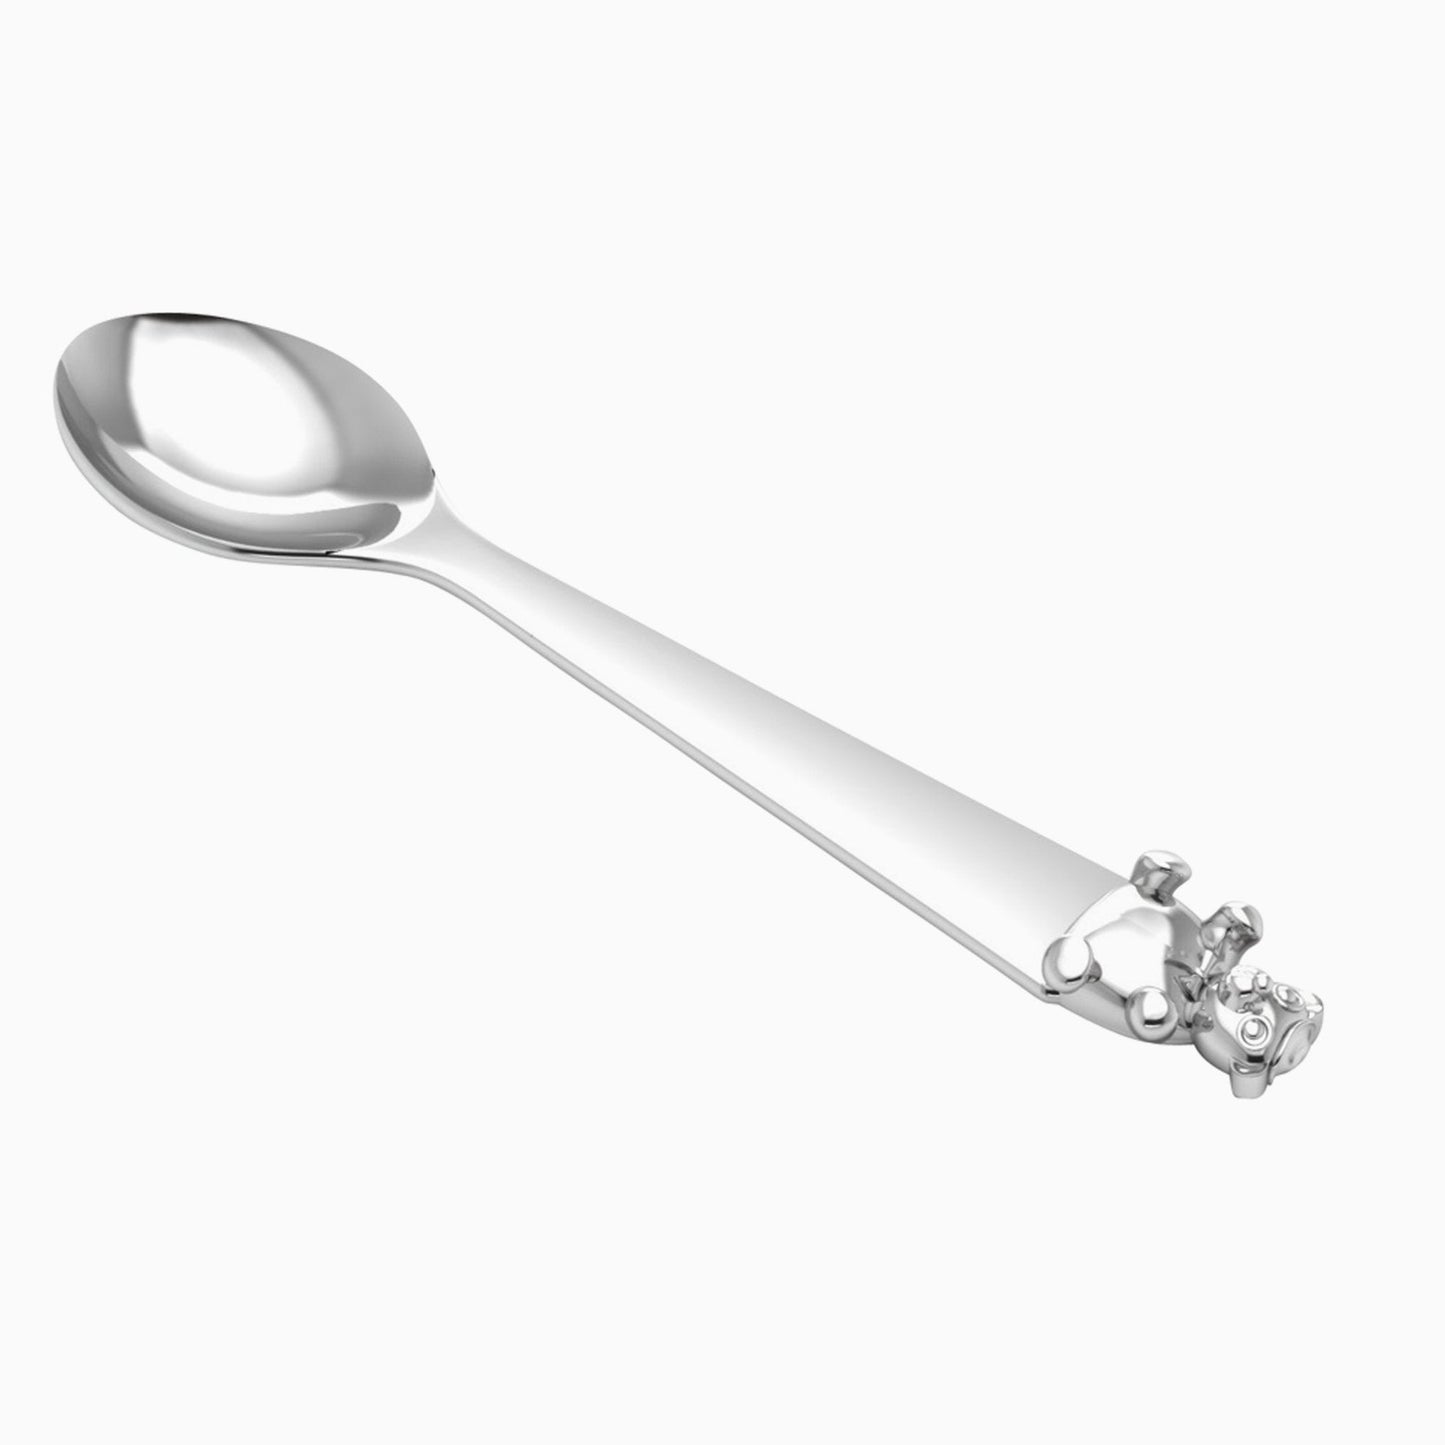 Teddy Sterling Silver Baby Feeding Spoon by Krysaliis